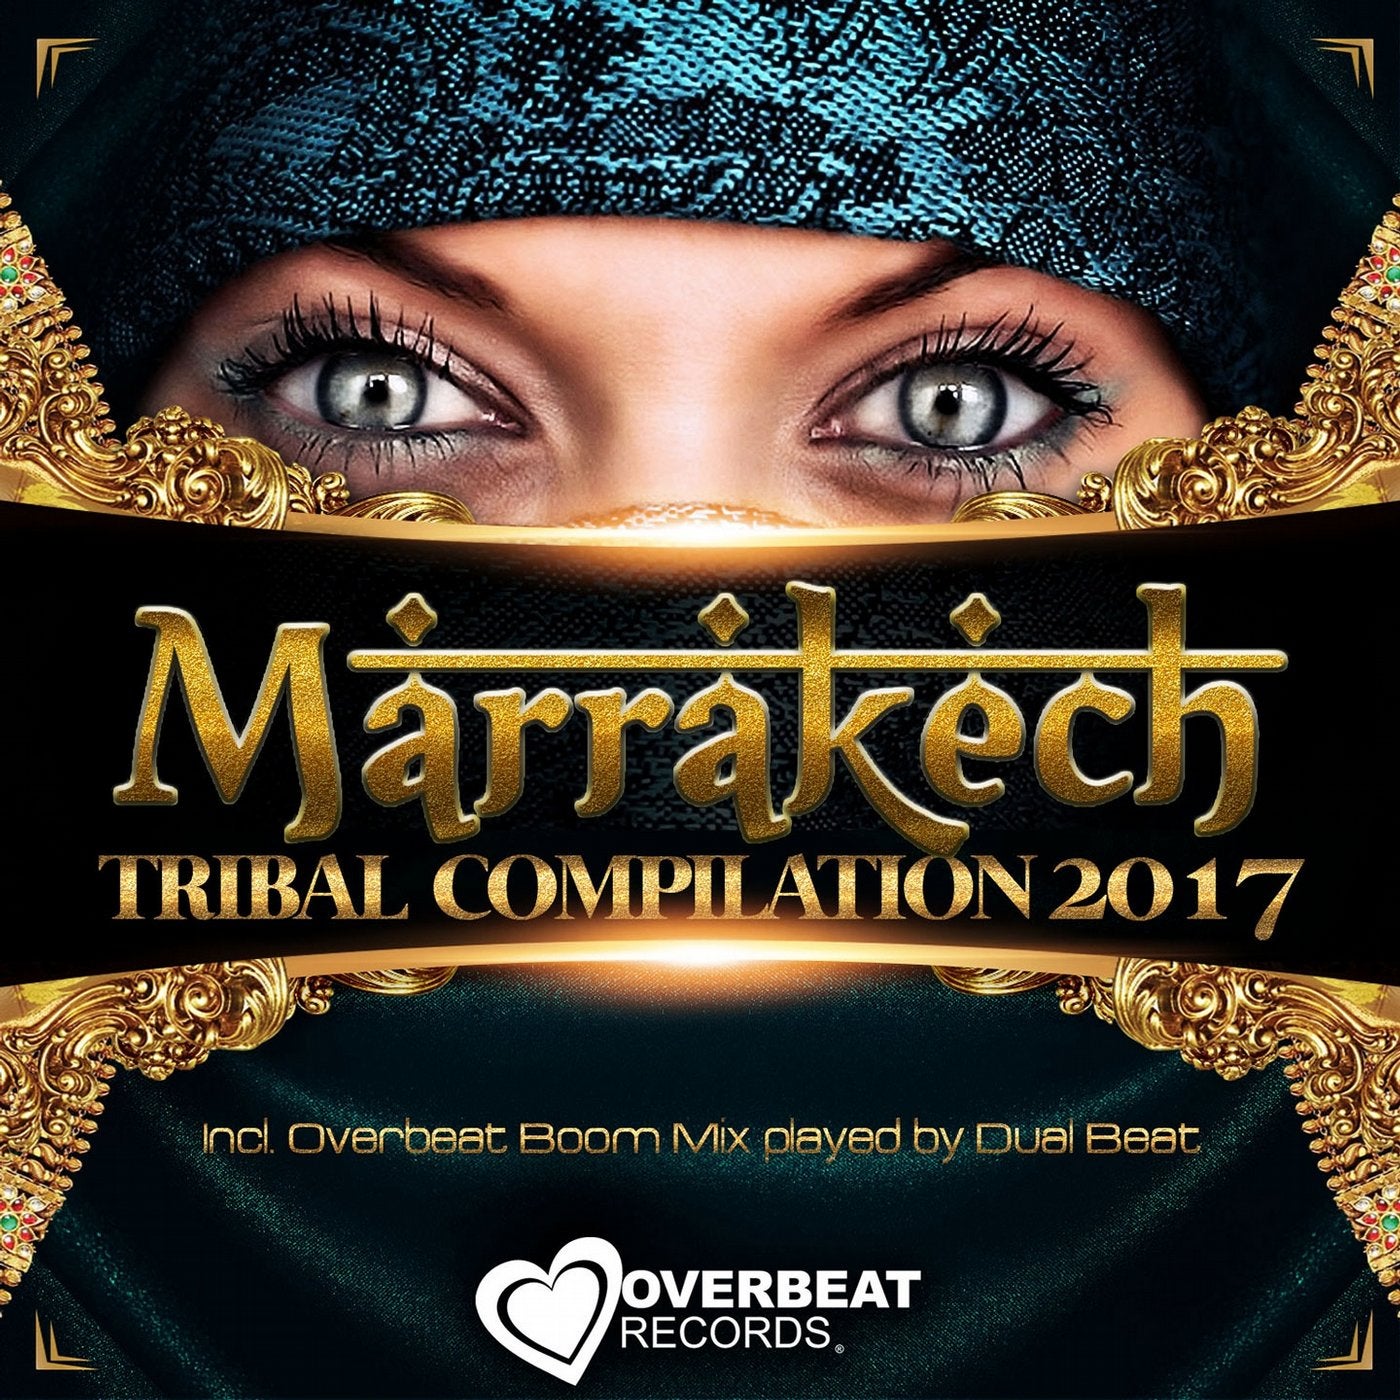 Marrakech Tribal Compilation 2017